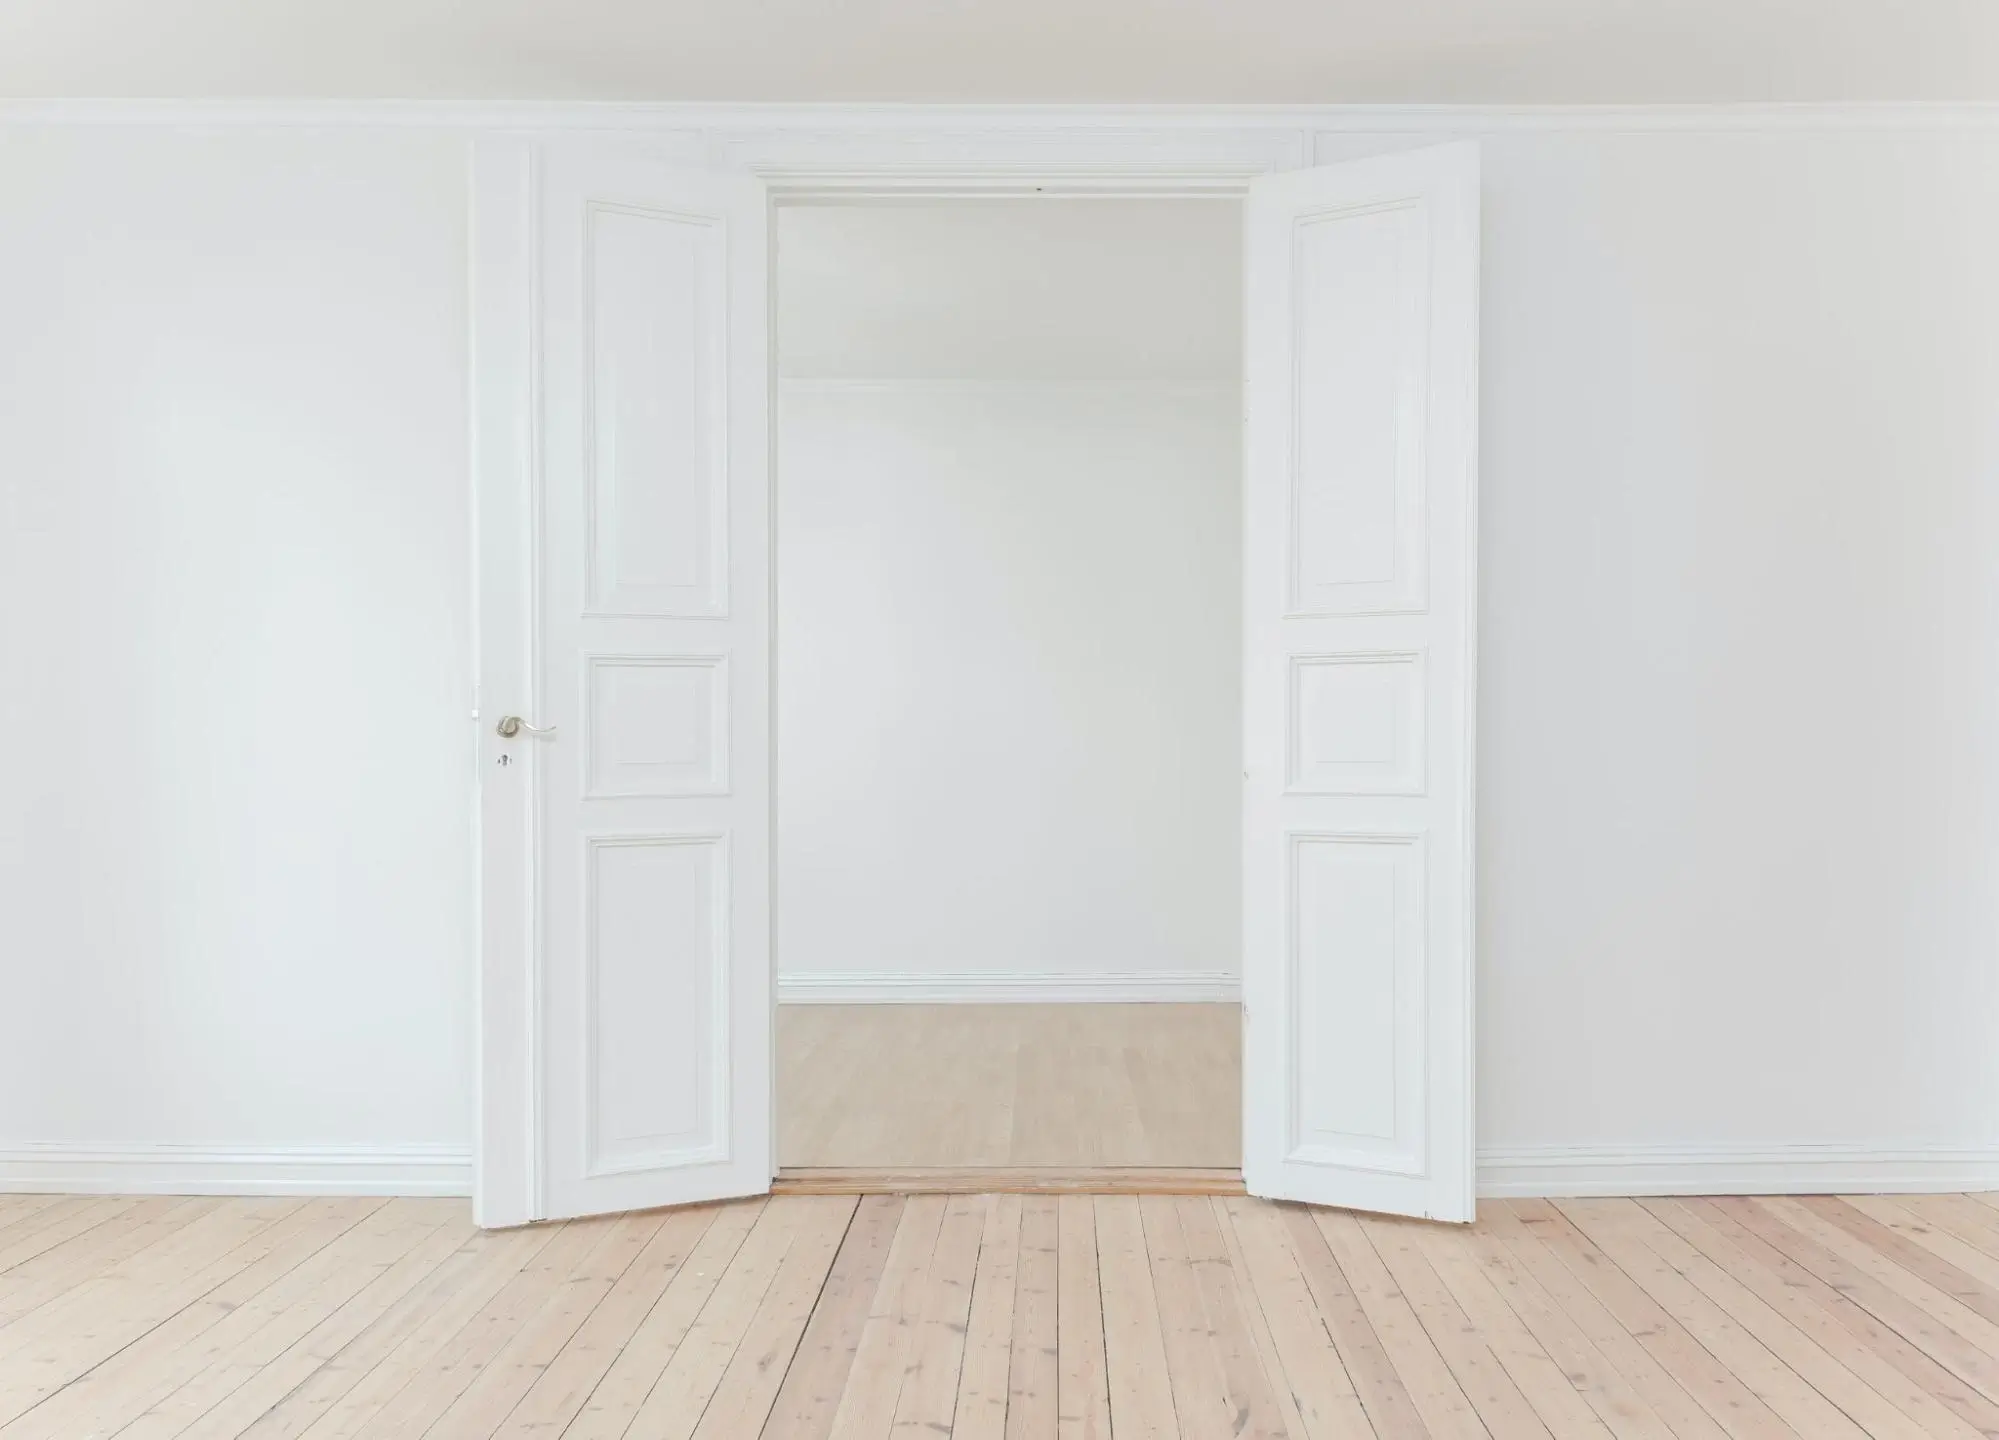 Open white doors and light wooden flooring.